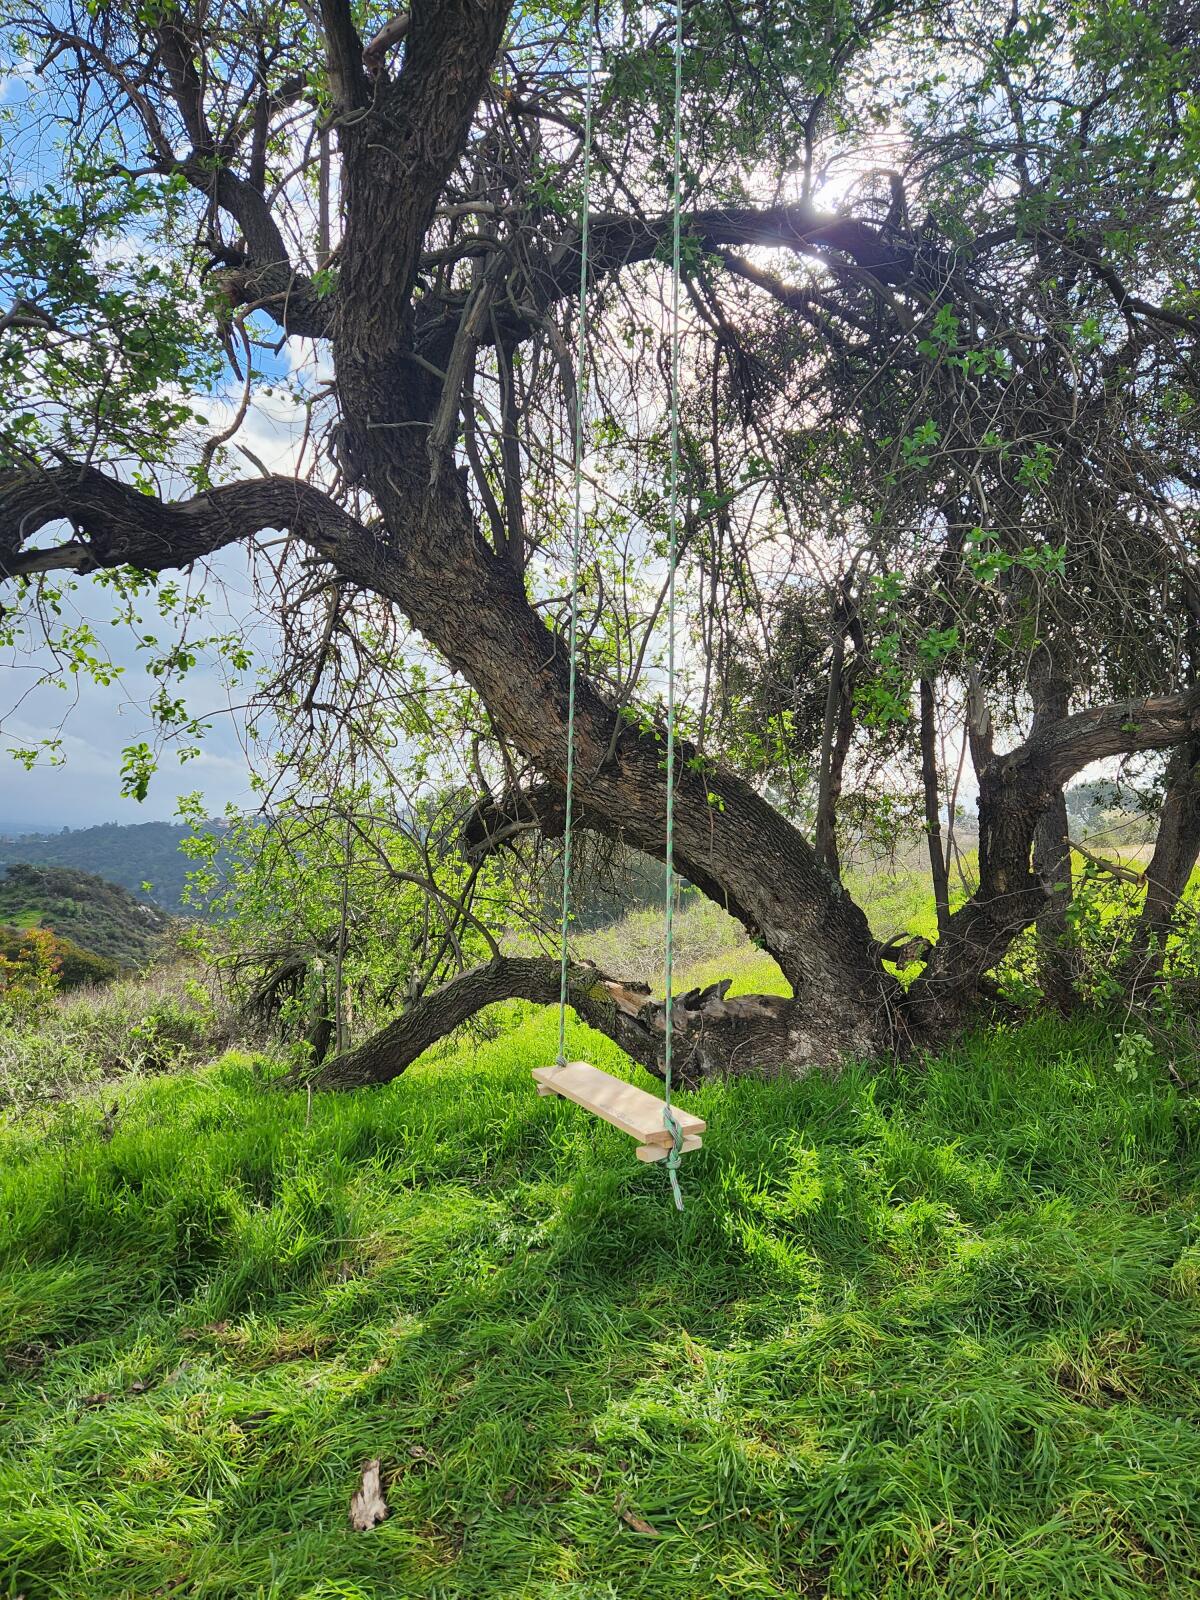 A swing on the Cherry Canyon hiking trail near La Cañada Flintridge.